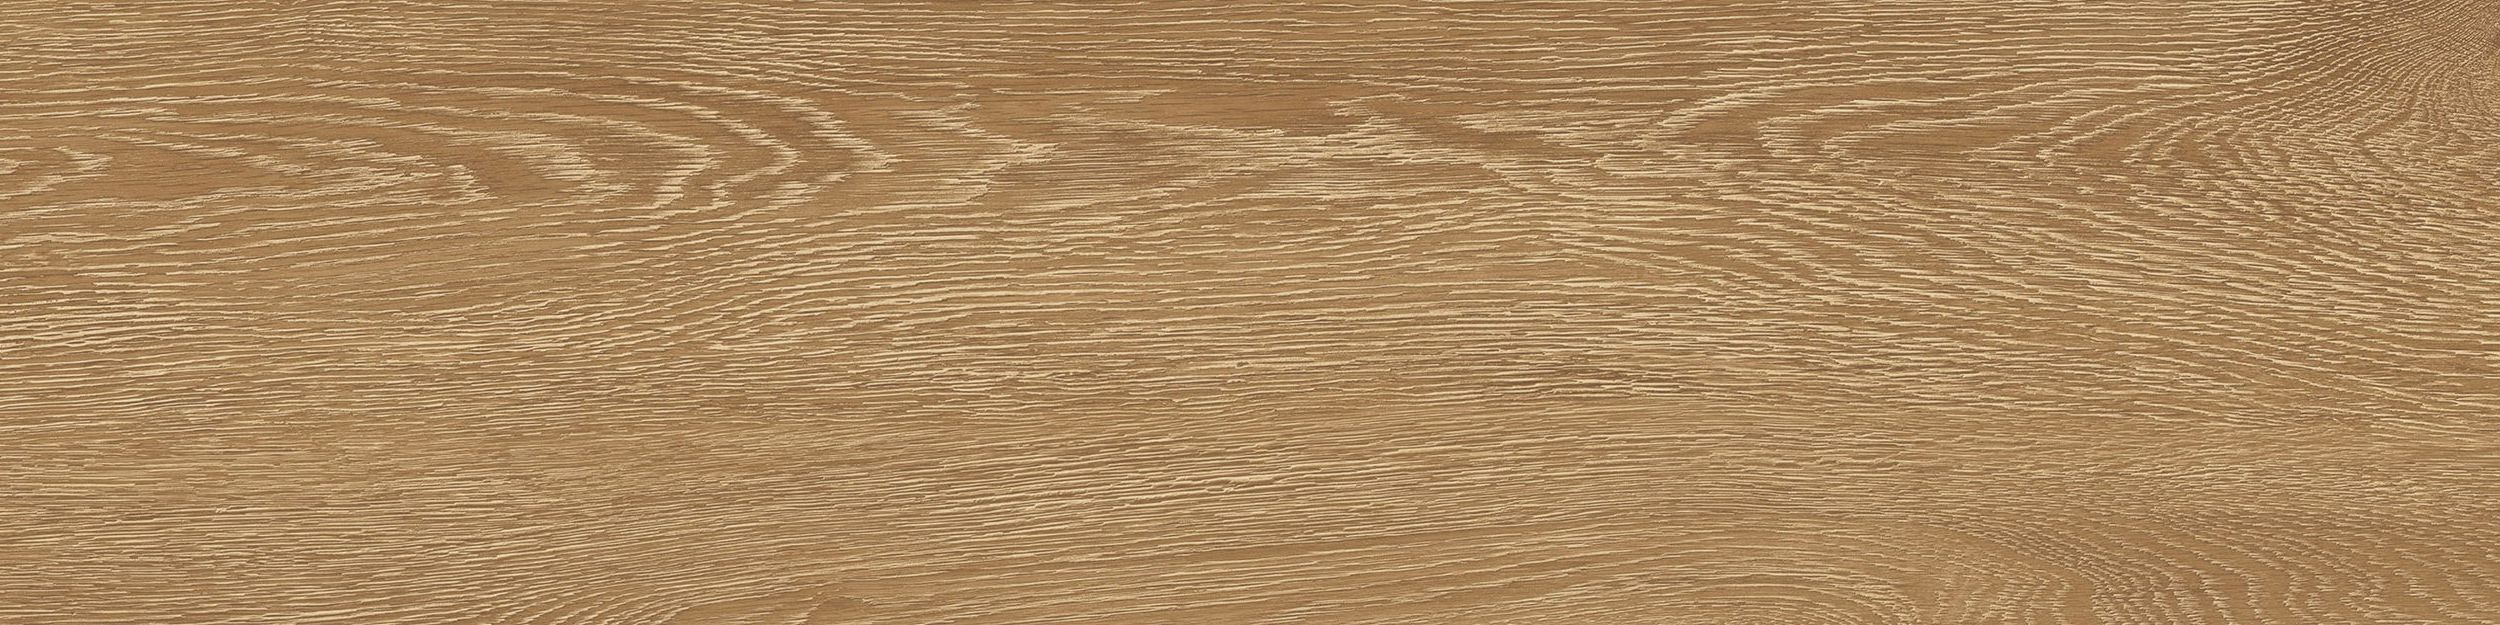 Textured Woodgrains LVT In Antique Oak imagen número 3